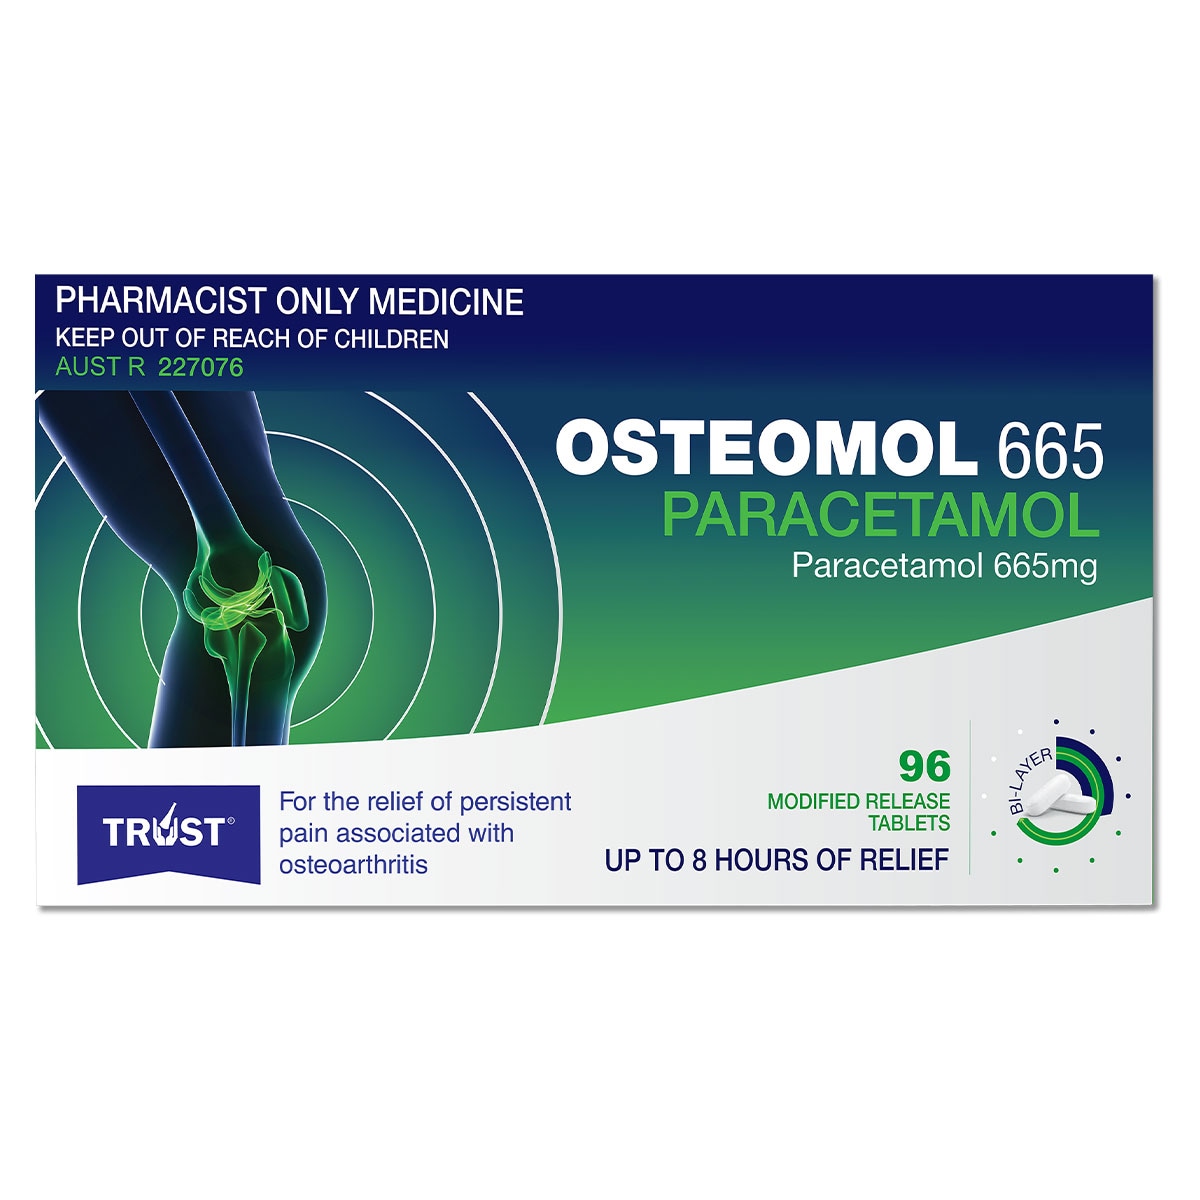 Trust Osteomol Paracetamol 665mg 96 Tablets Blister Pack